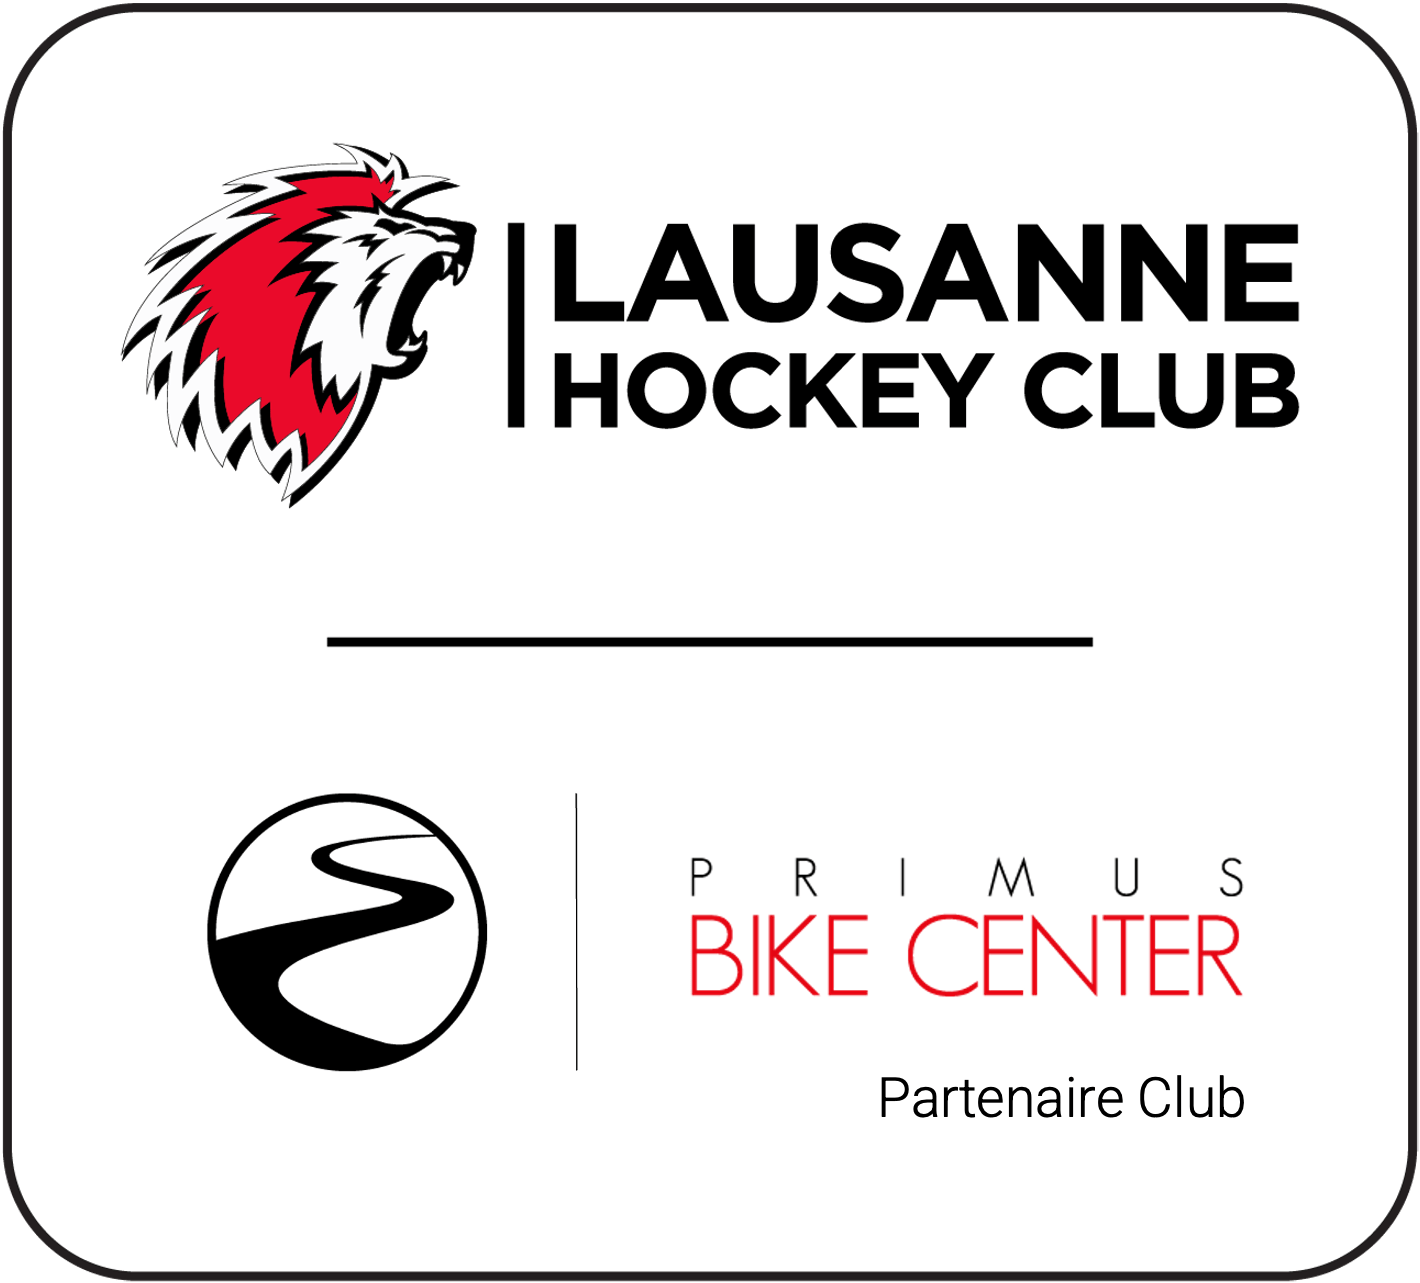 Lausanne Hockey Club | Partenaire Club | Primus Bike Center